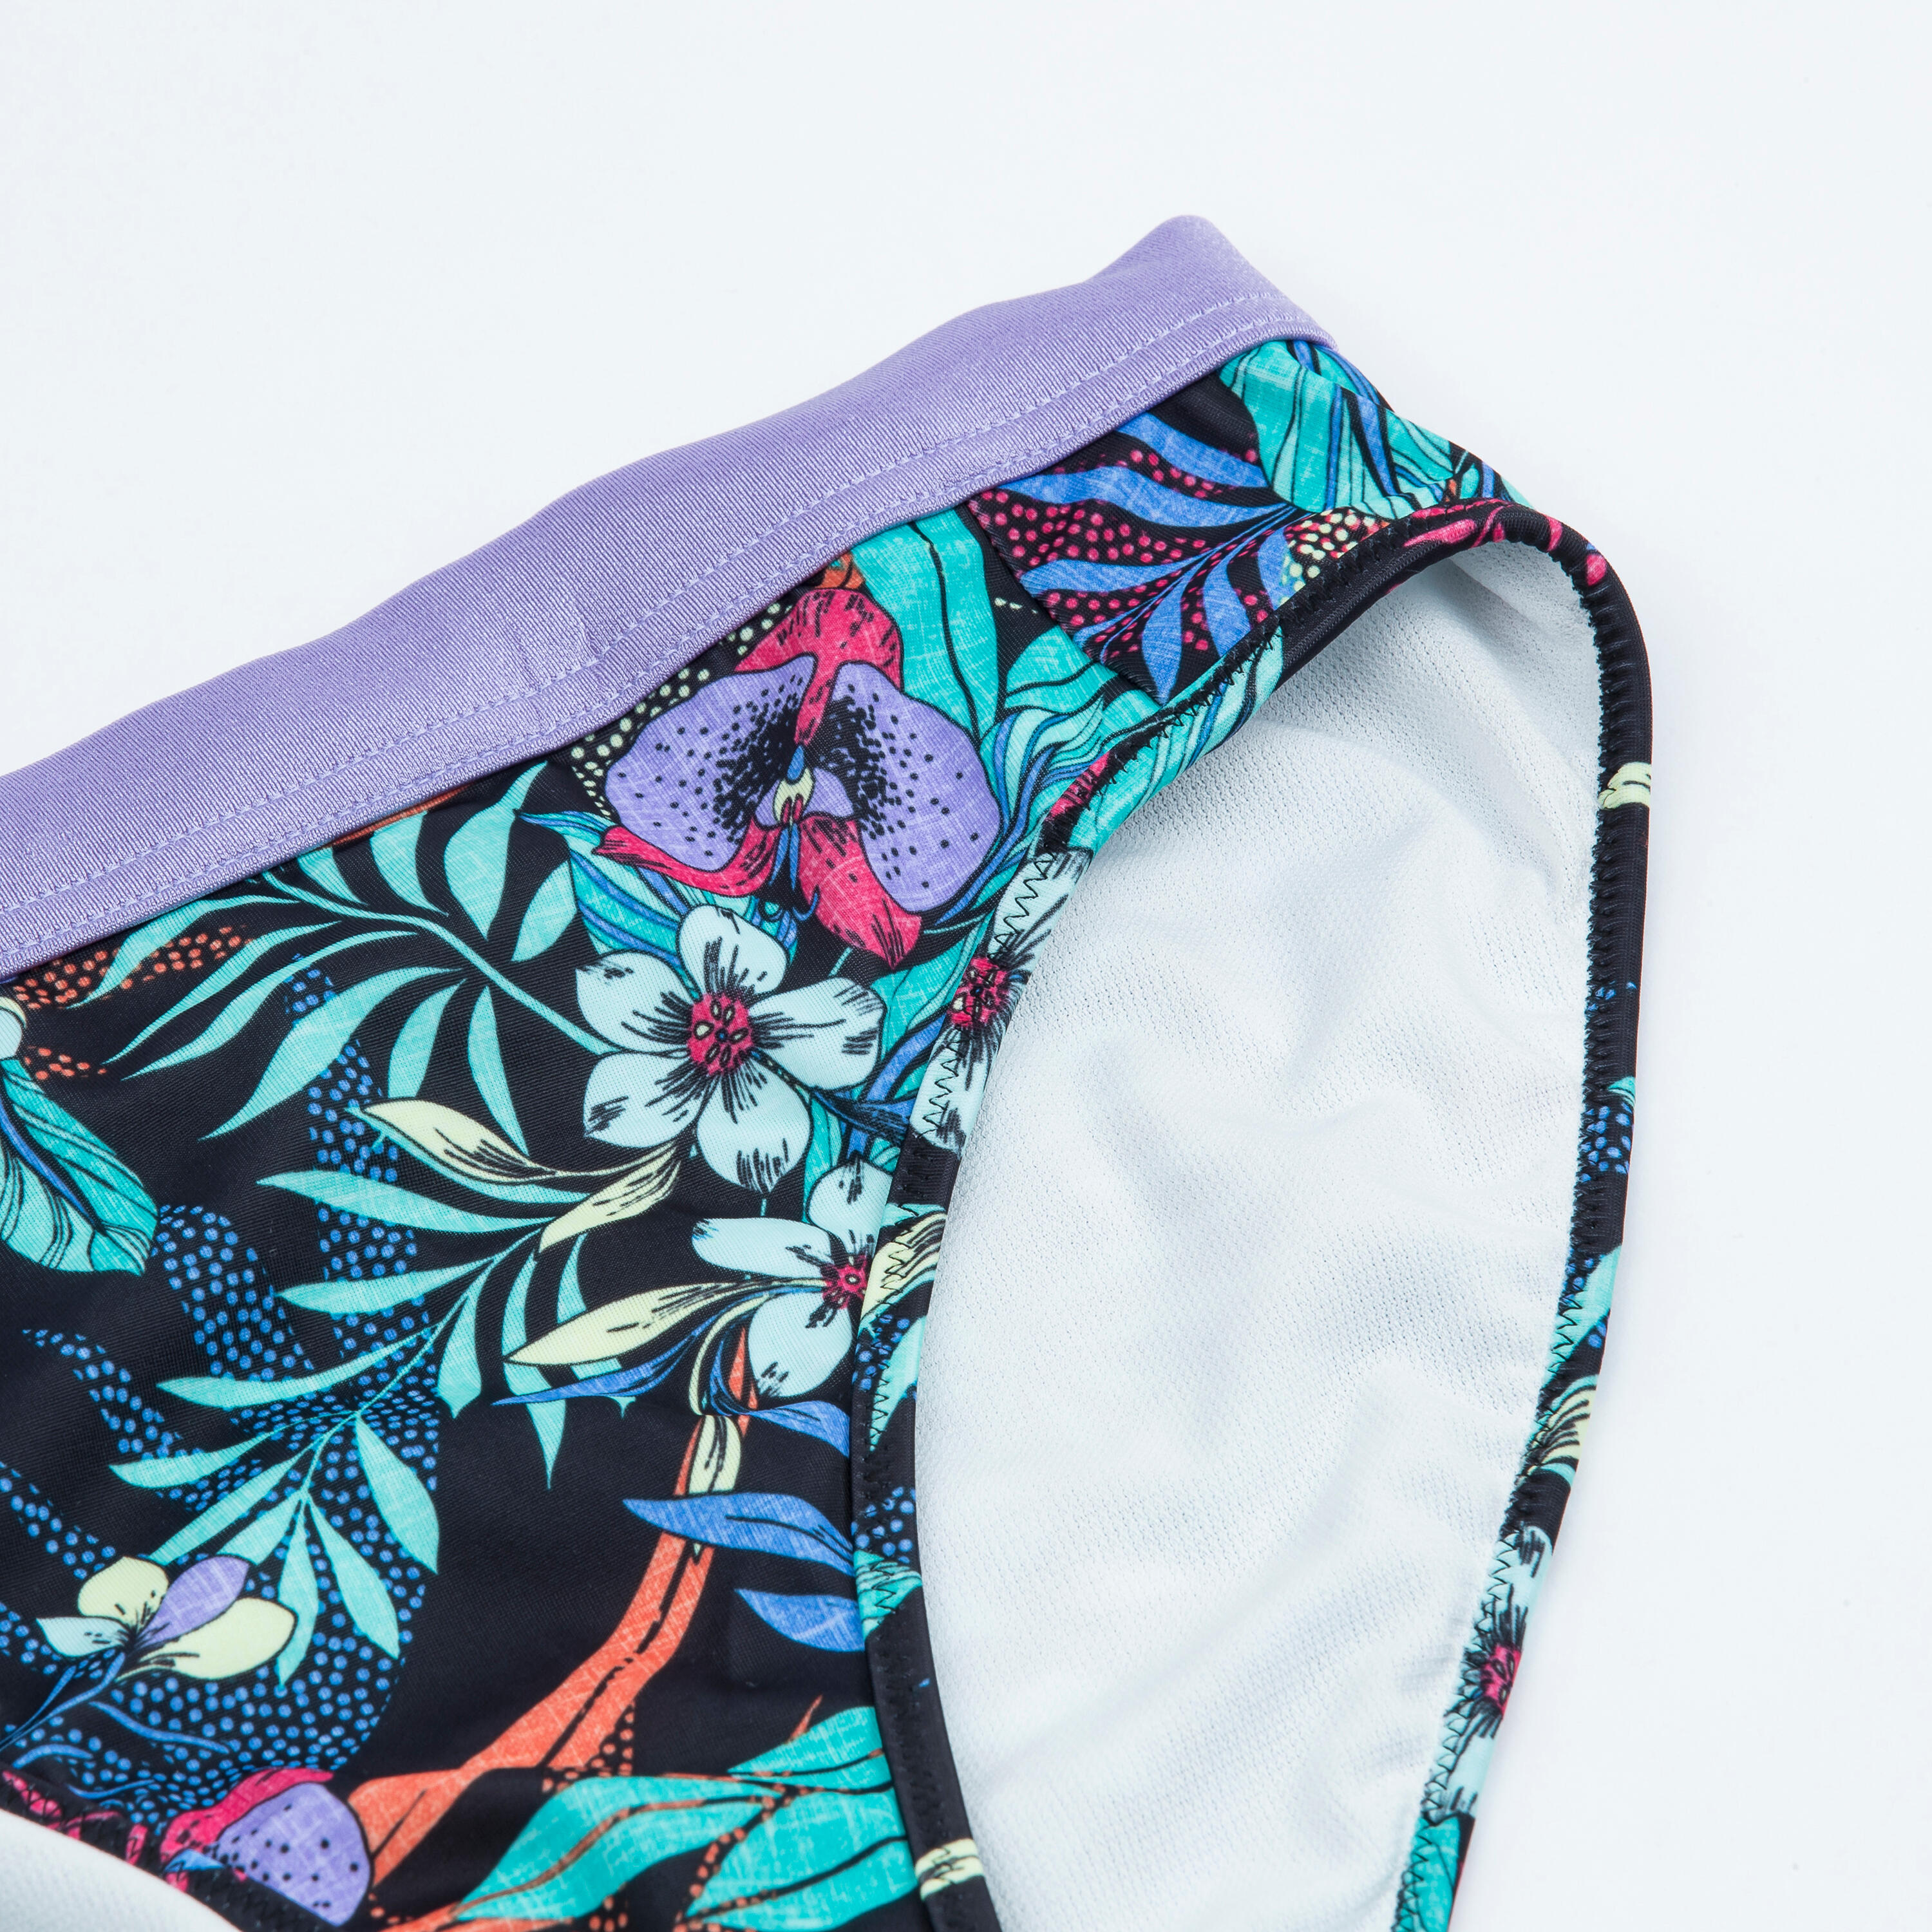 Girl's swimsuit bottoms - 900 Buddy purple turquoise 5/8